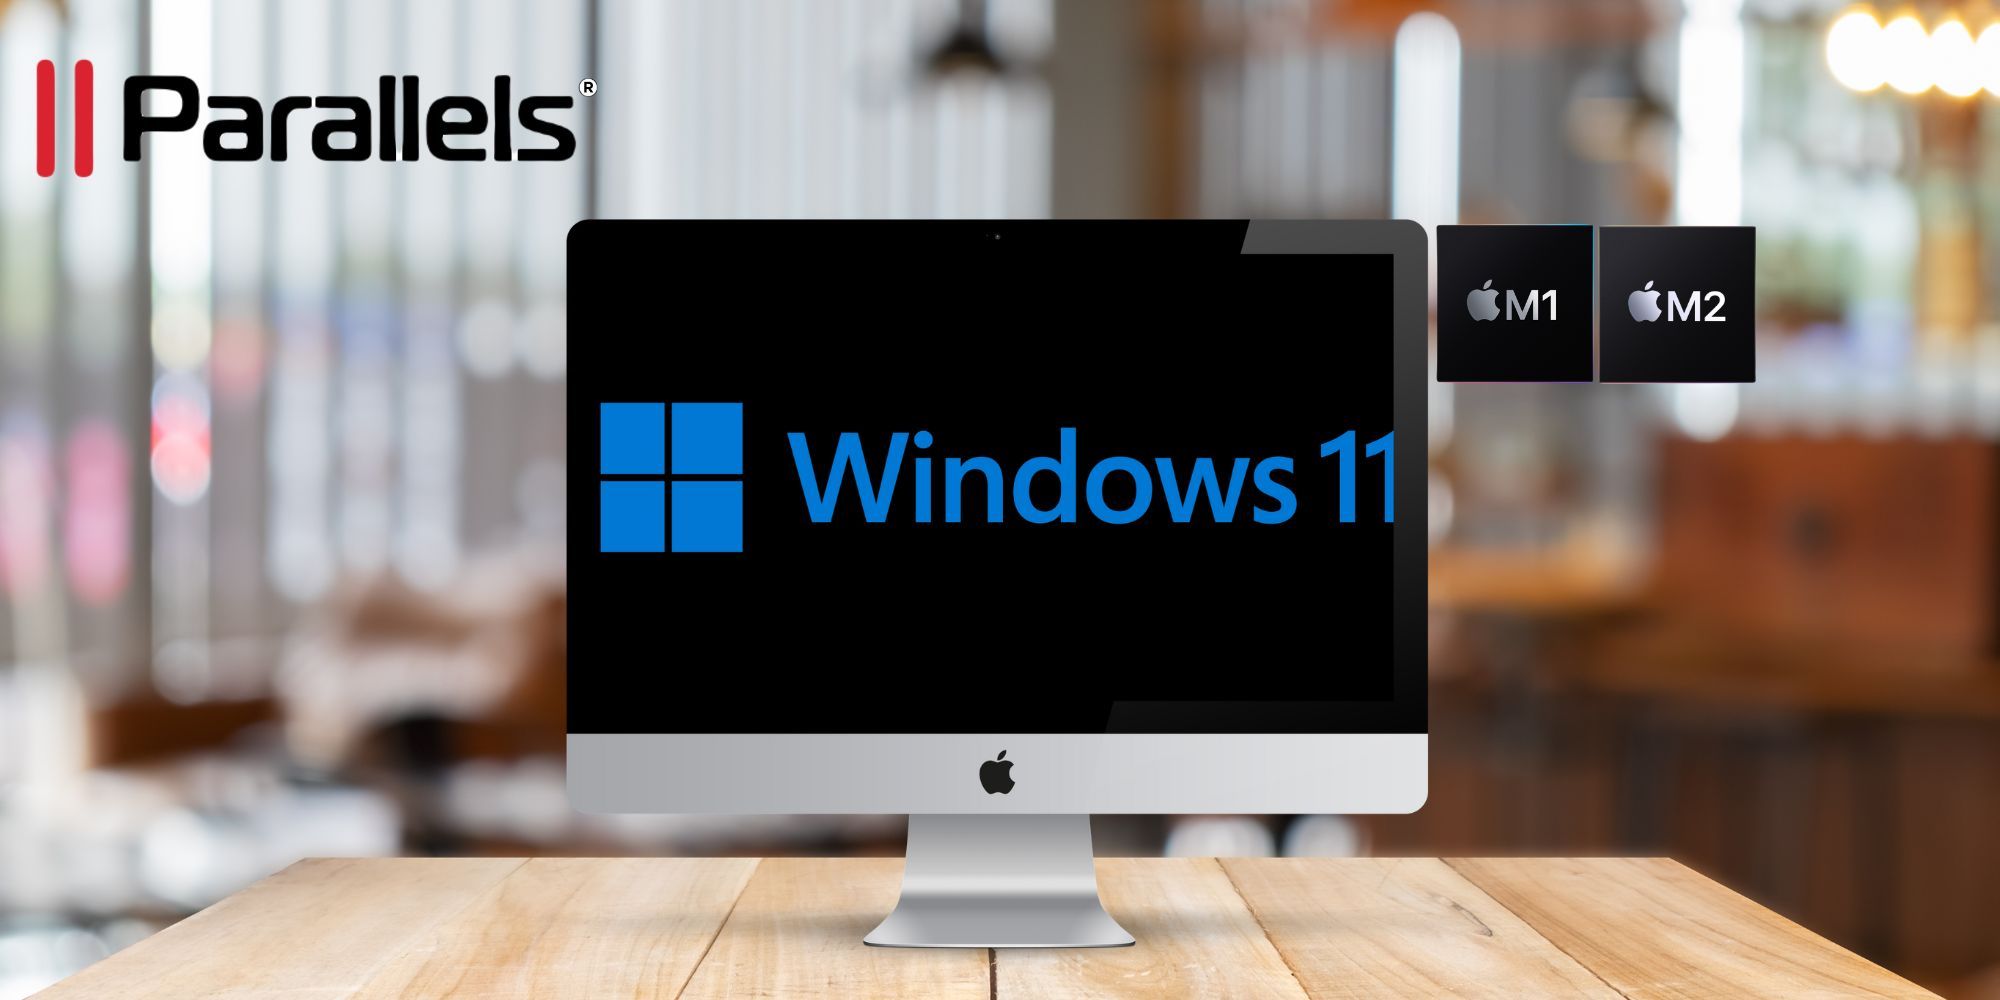 Image of Parallels Desktop with Windows 11 logo on Apple Mac.